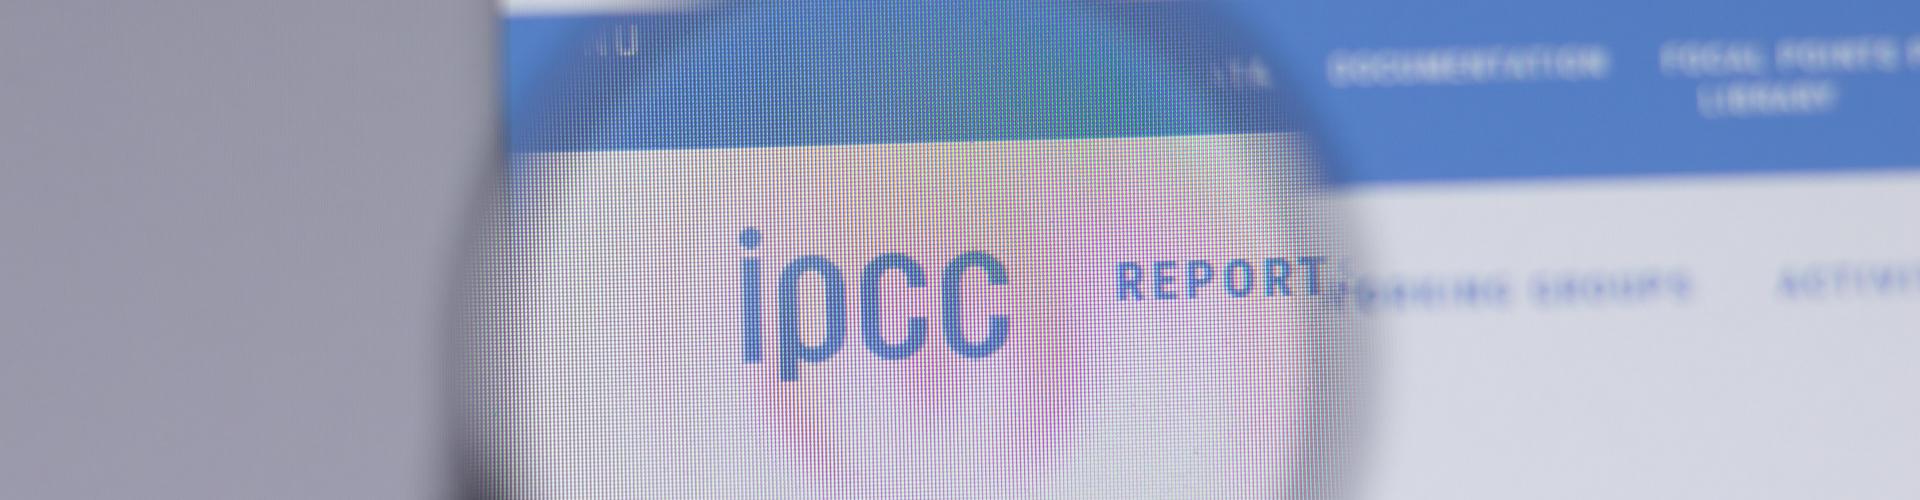 IPCC Press Release background